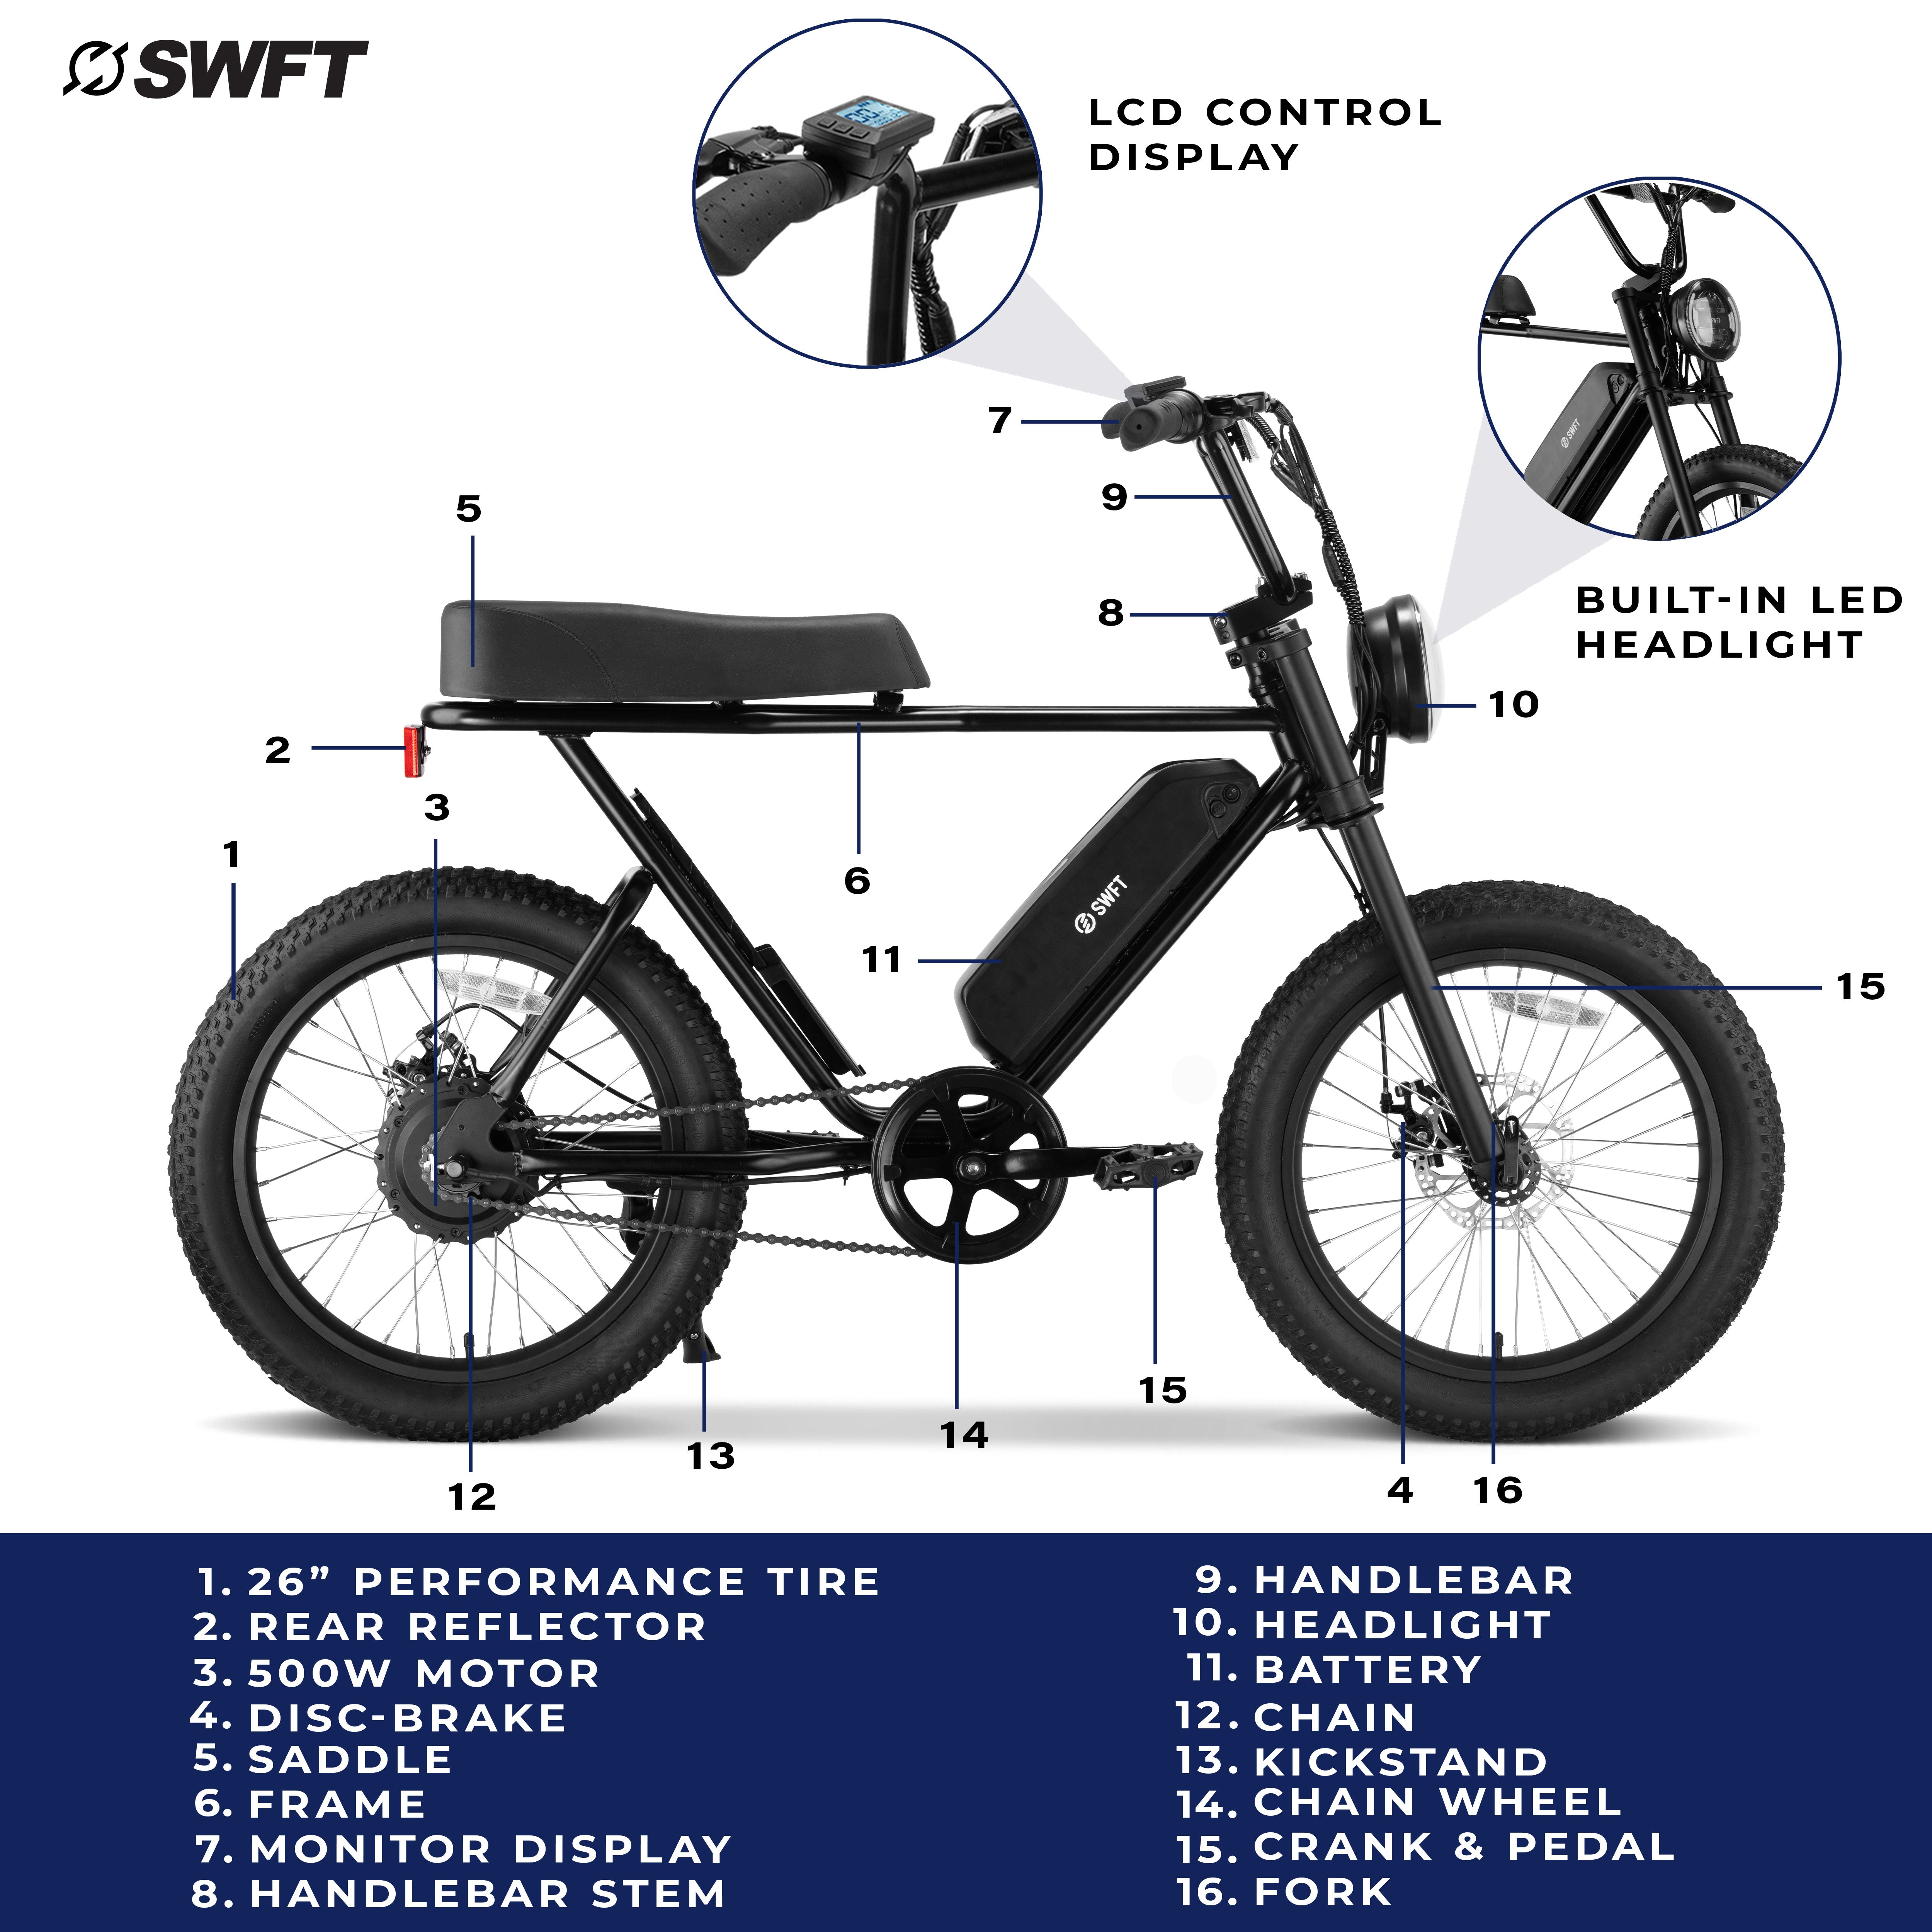 SWFT Zip - 500W Class-2 All-Terrain E-bike with Pedal Assist